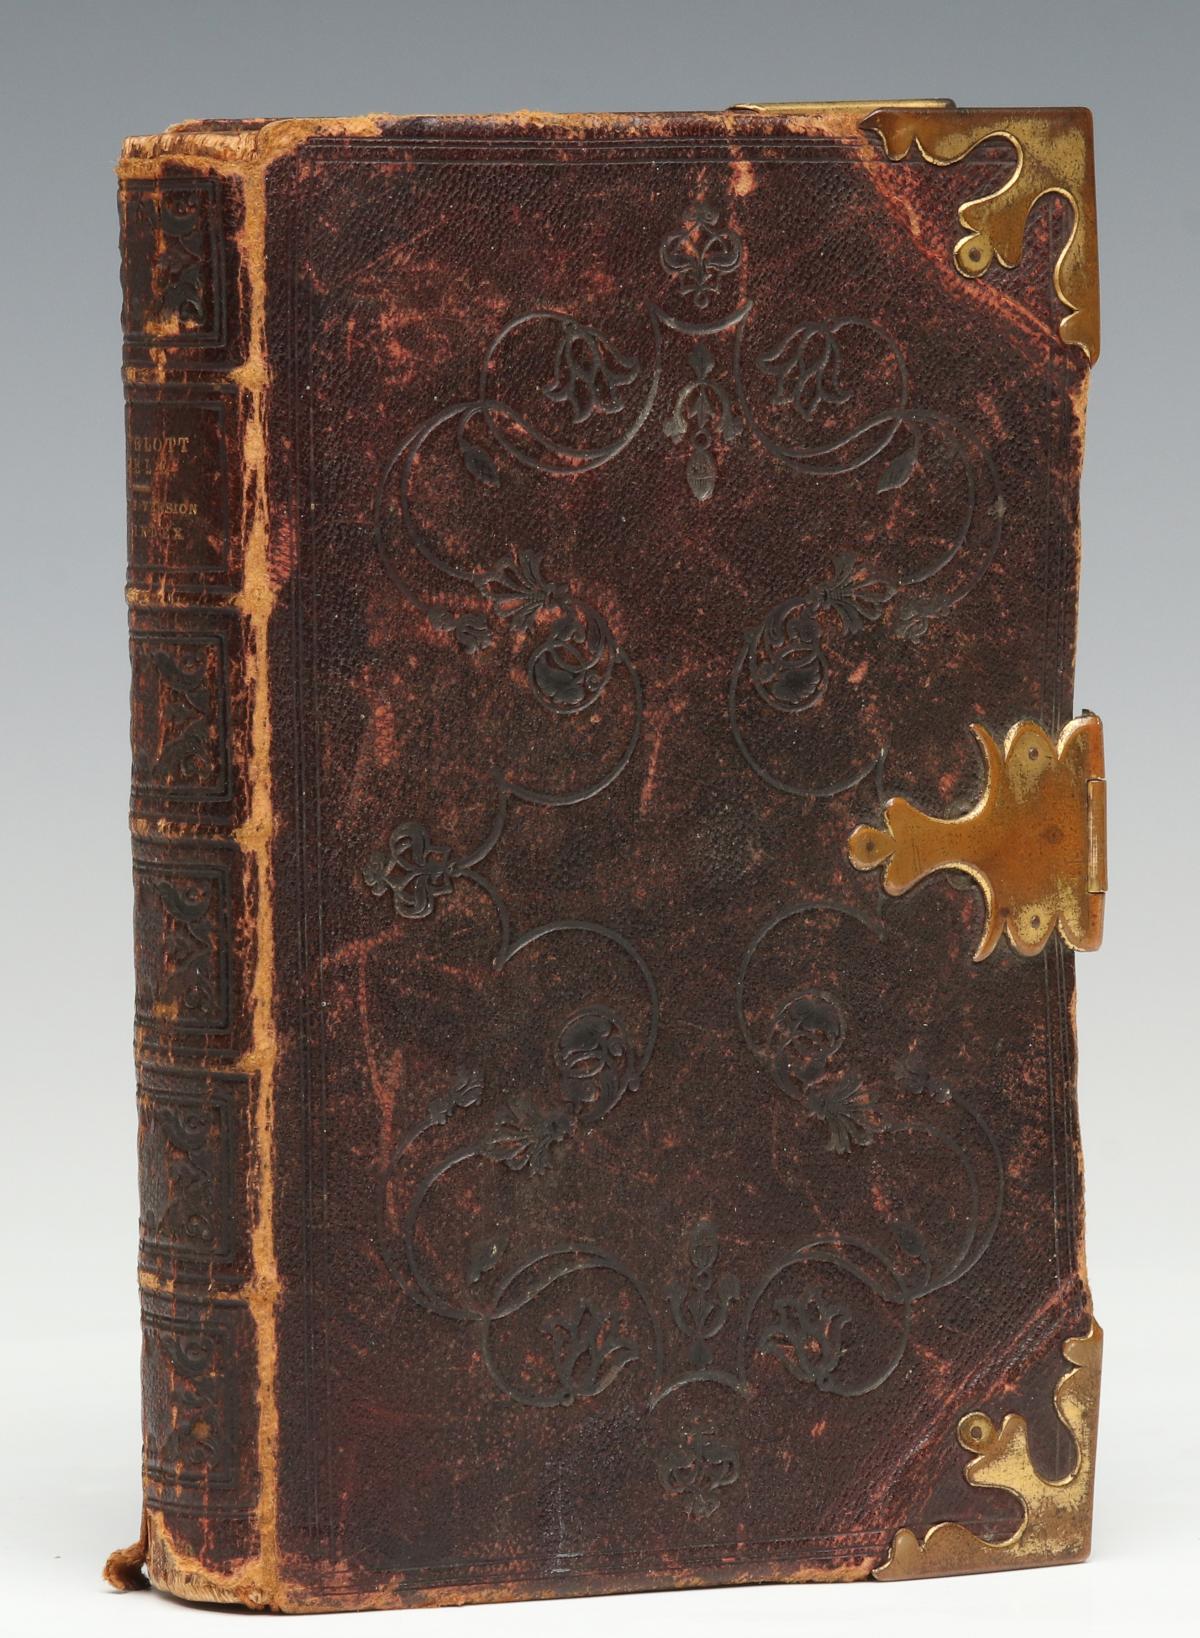 THE POLYGLOTT BIBLE CIRCA 1865